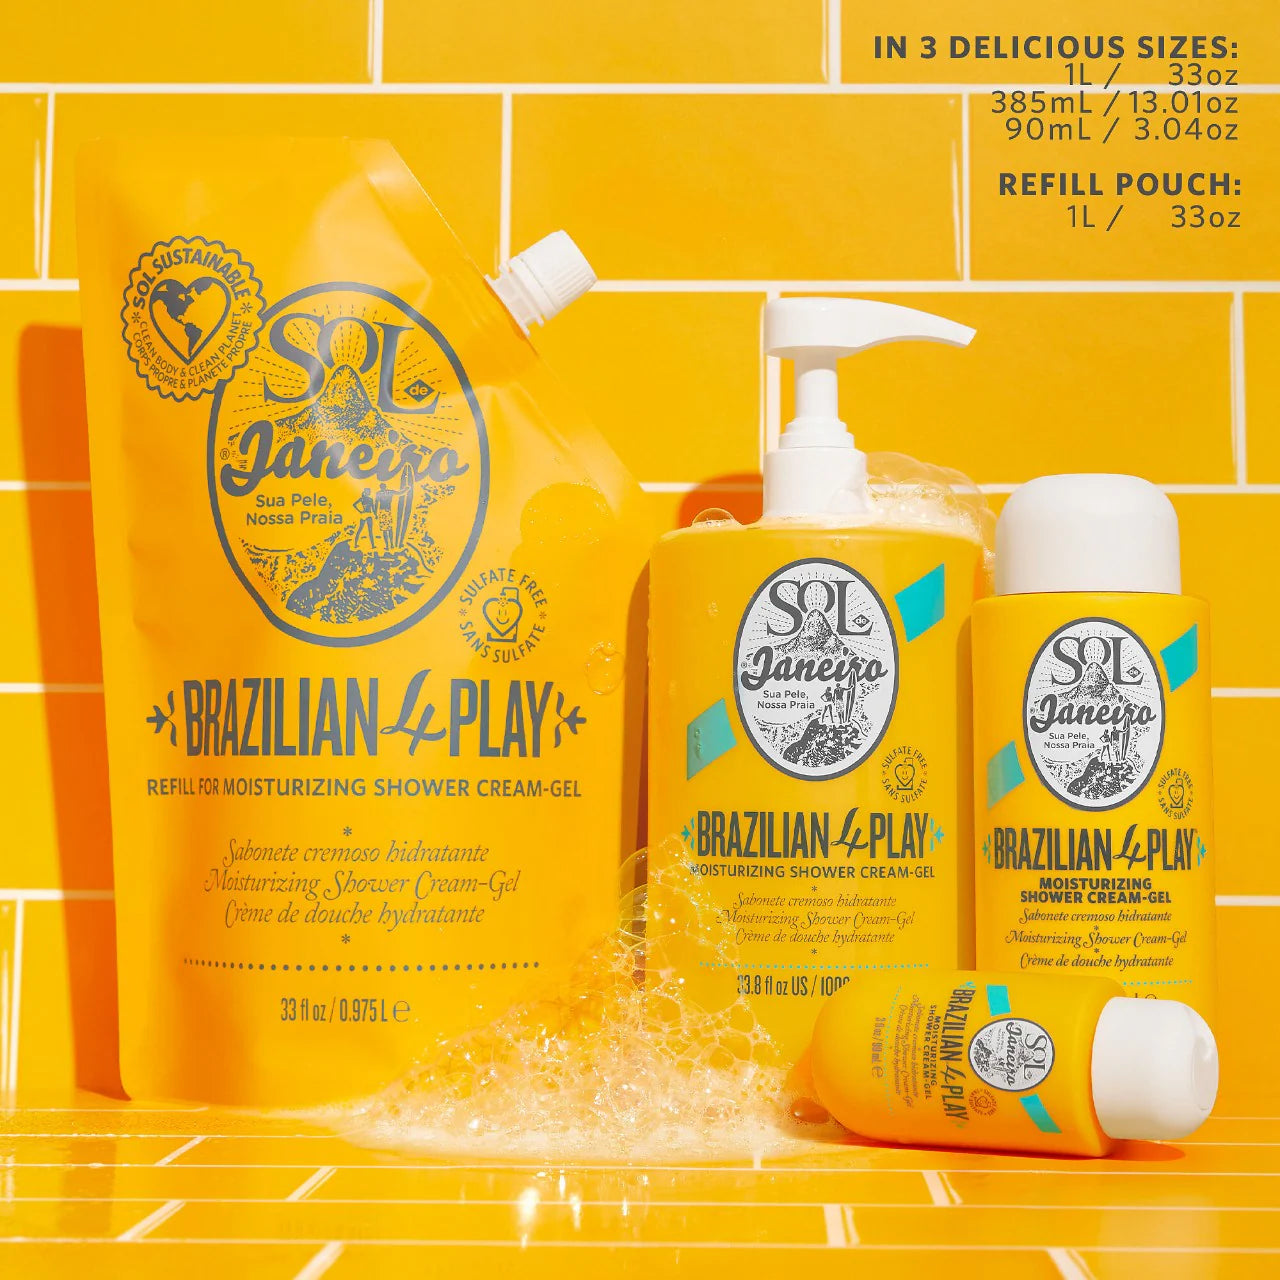 Sol de Janeiro - Brazilian 4 Play Moisturizing Shower Cream-Gel